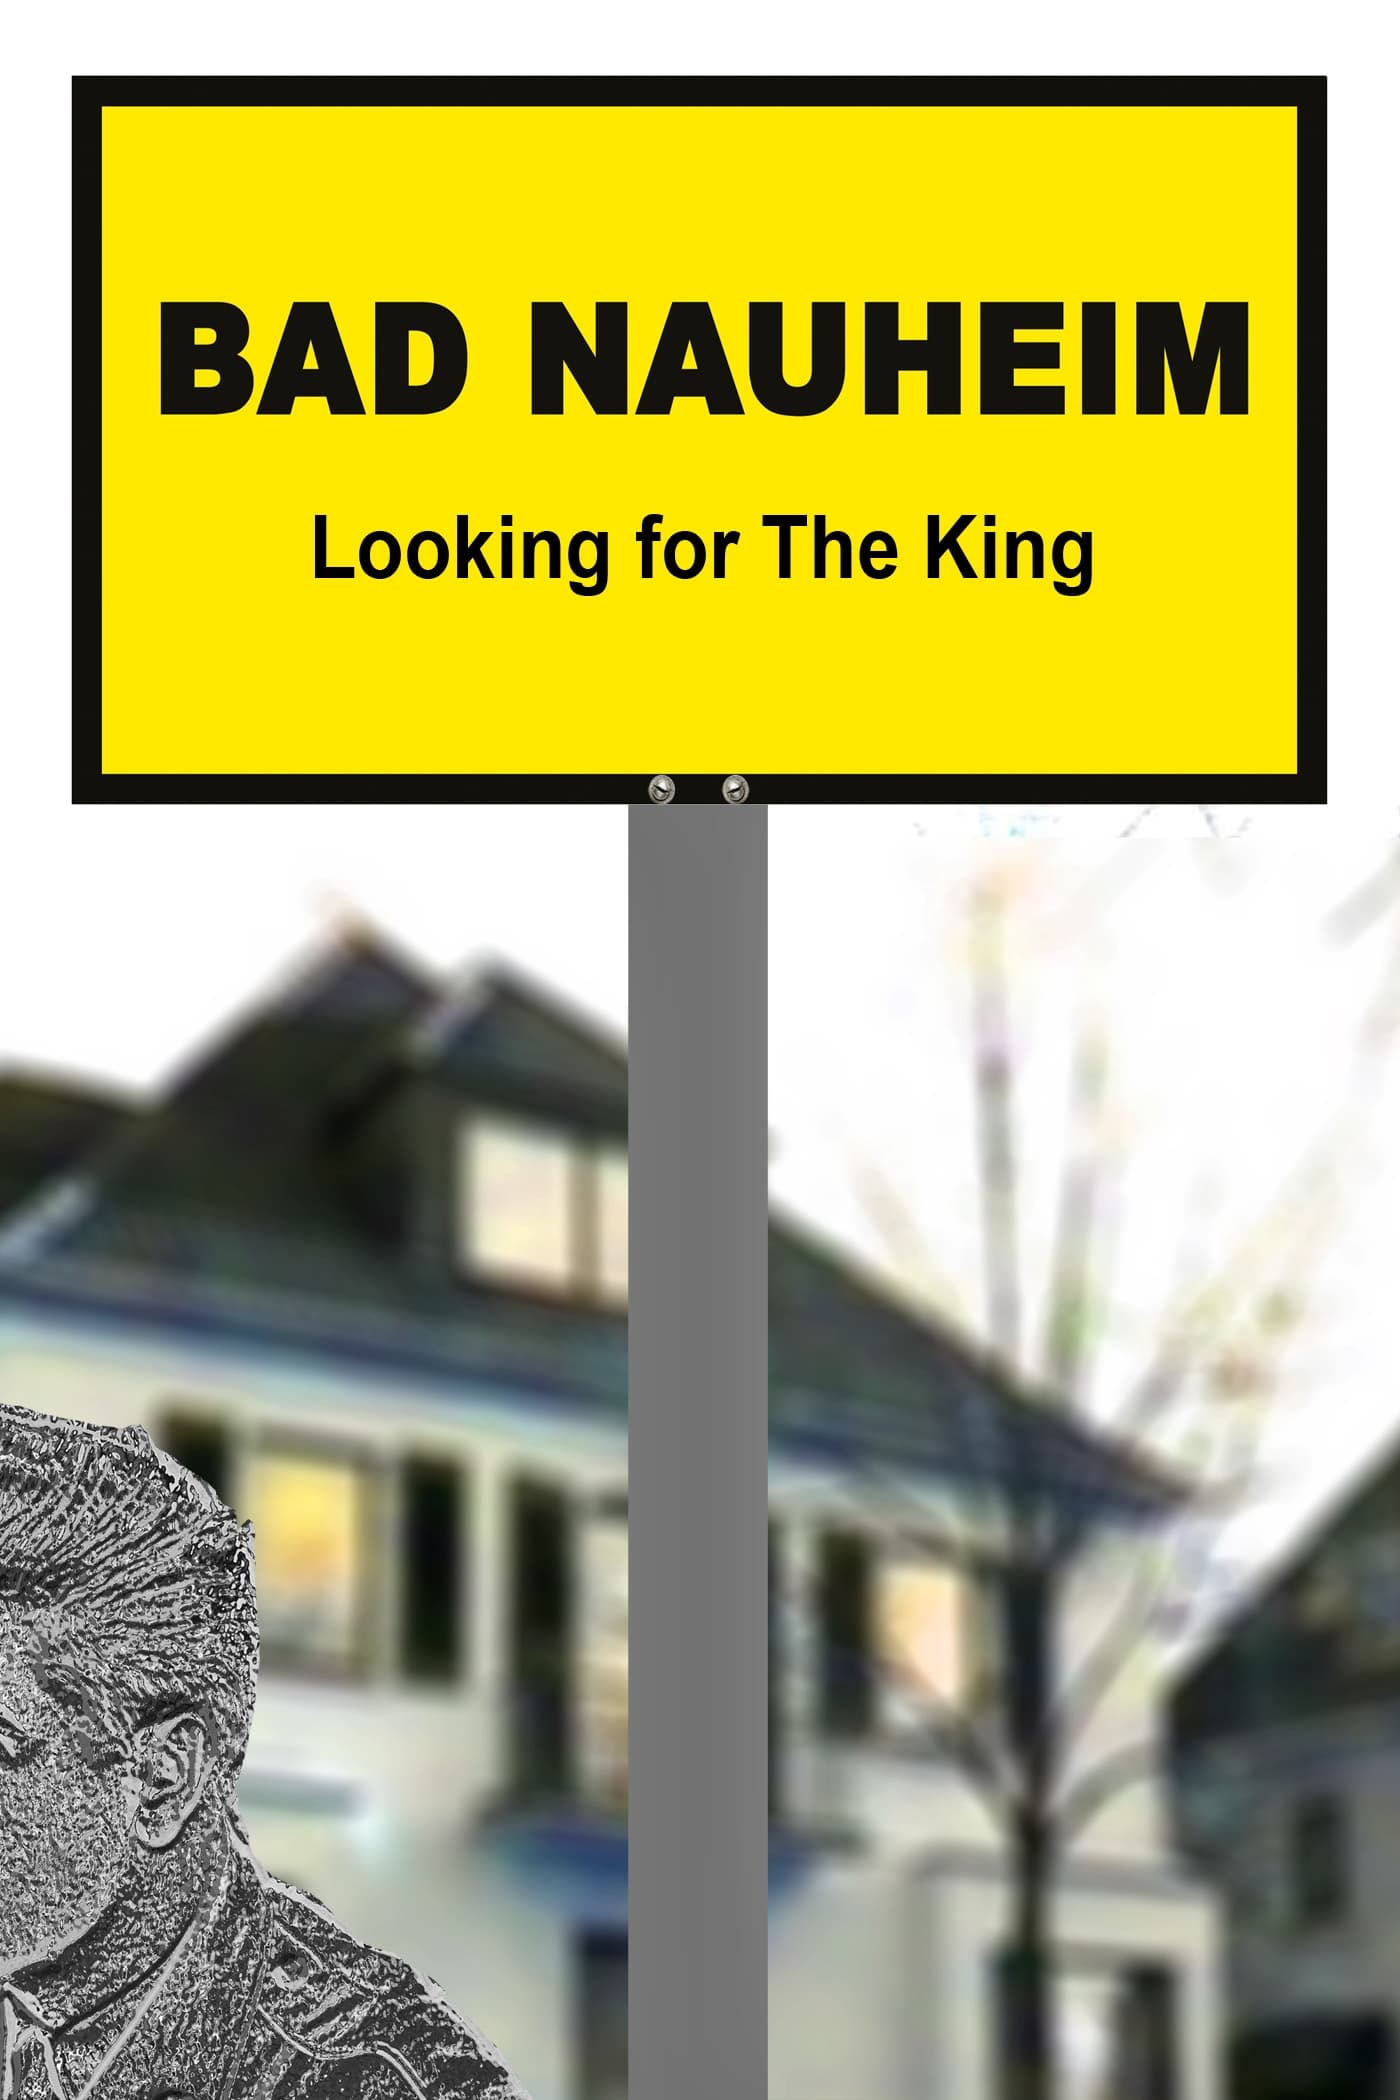 Bad Nauheim: Looking for The King